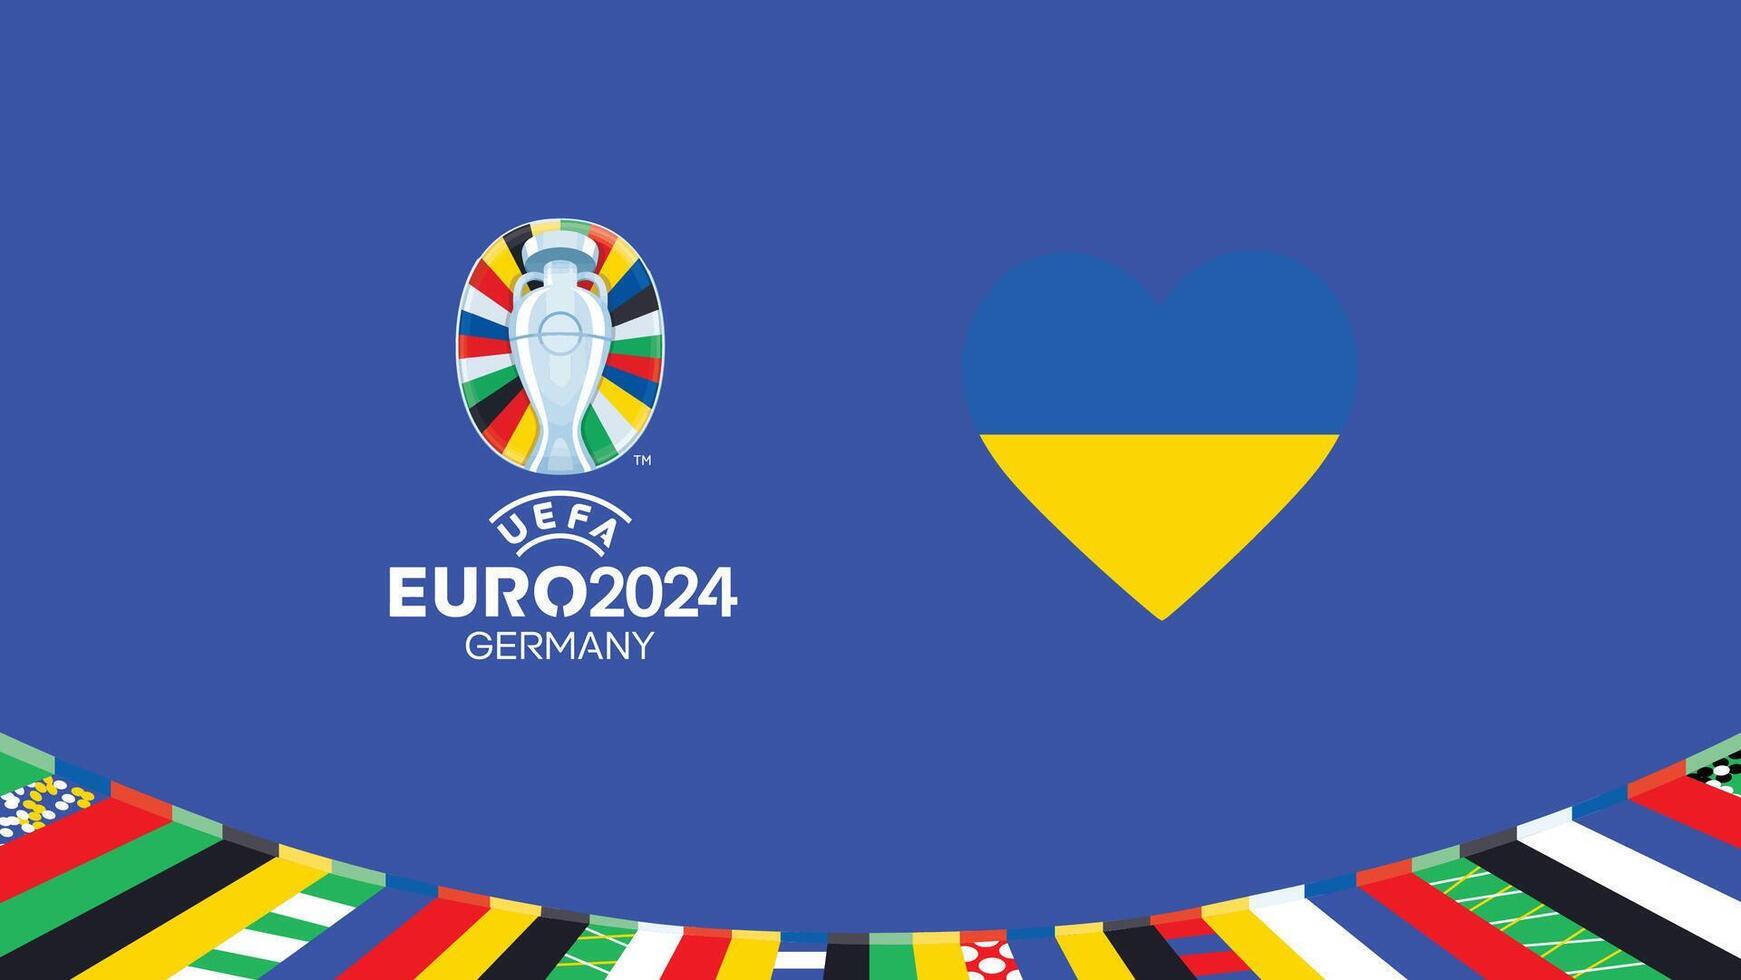 Euro 2024 Ukraine Emblem Heart Teams Design With Official Symbol Logo Abstract Countries European Football Illustration vector